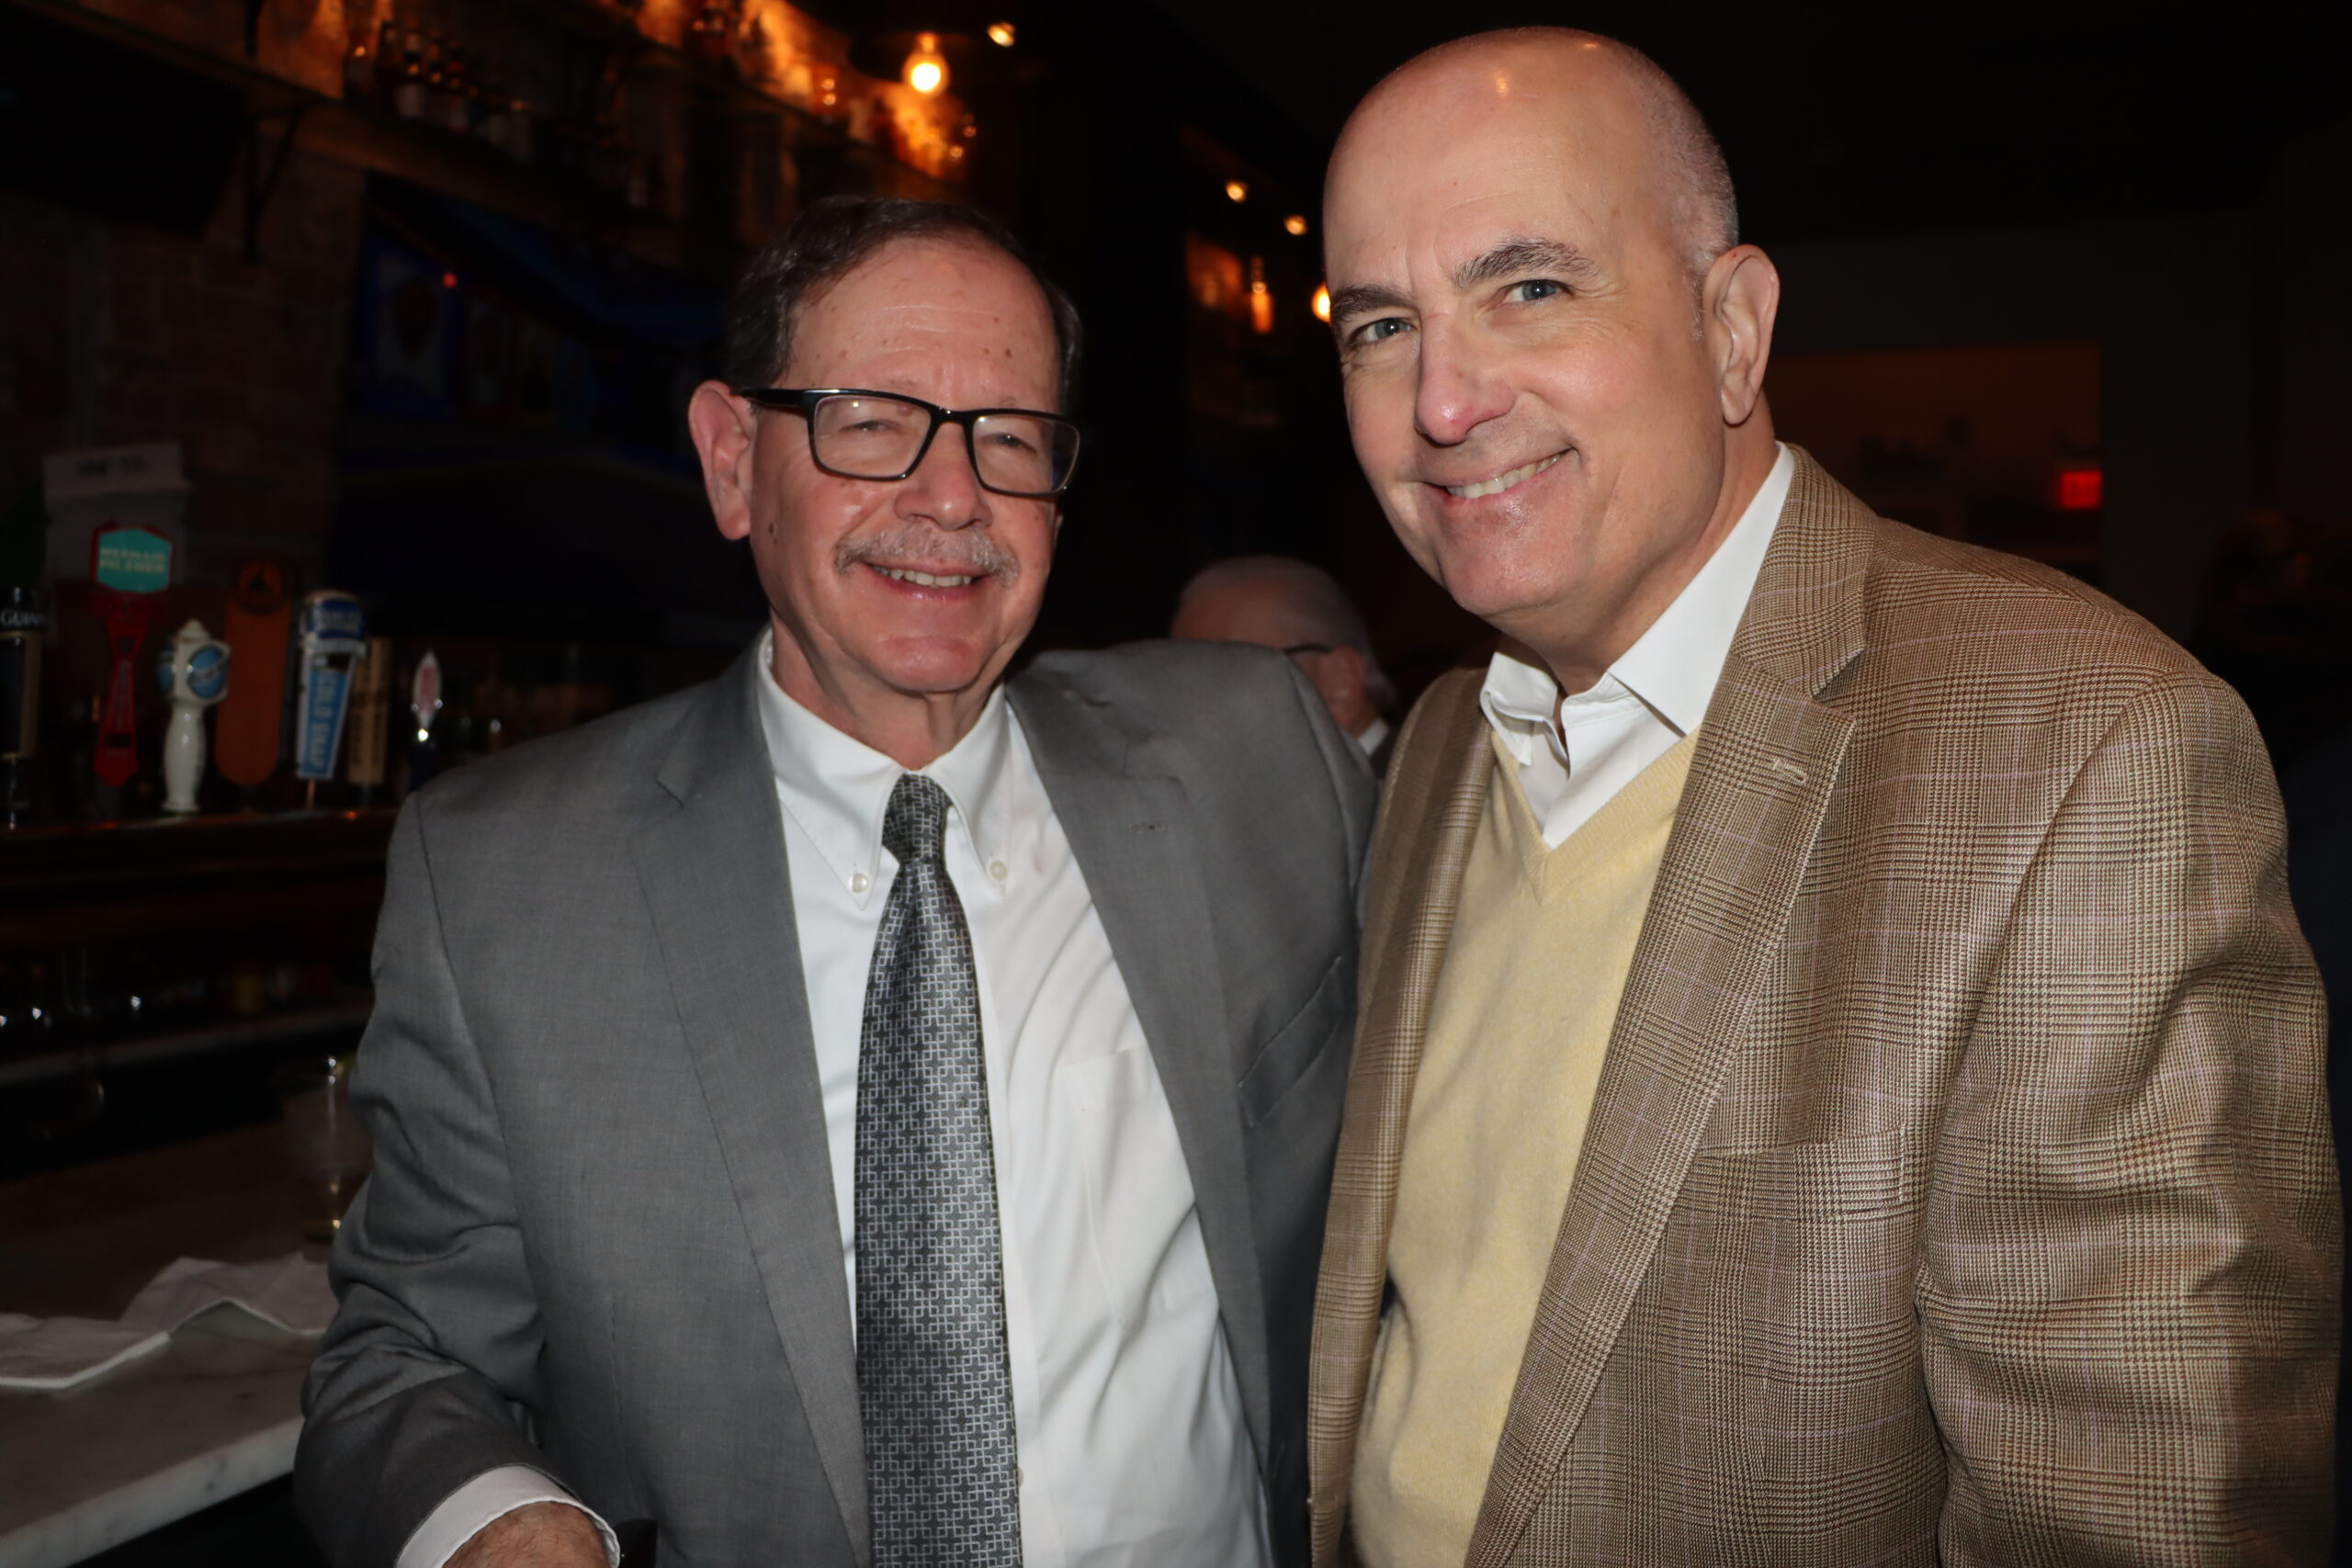 Hon. Mark Partnow (left) and Hon. Carl Landicino at Kurtz’s retirement party.